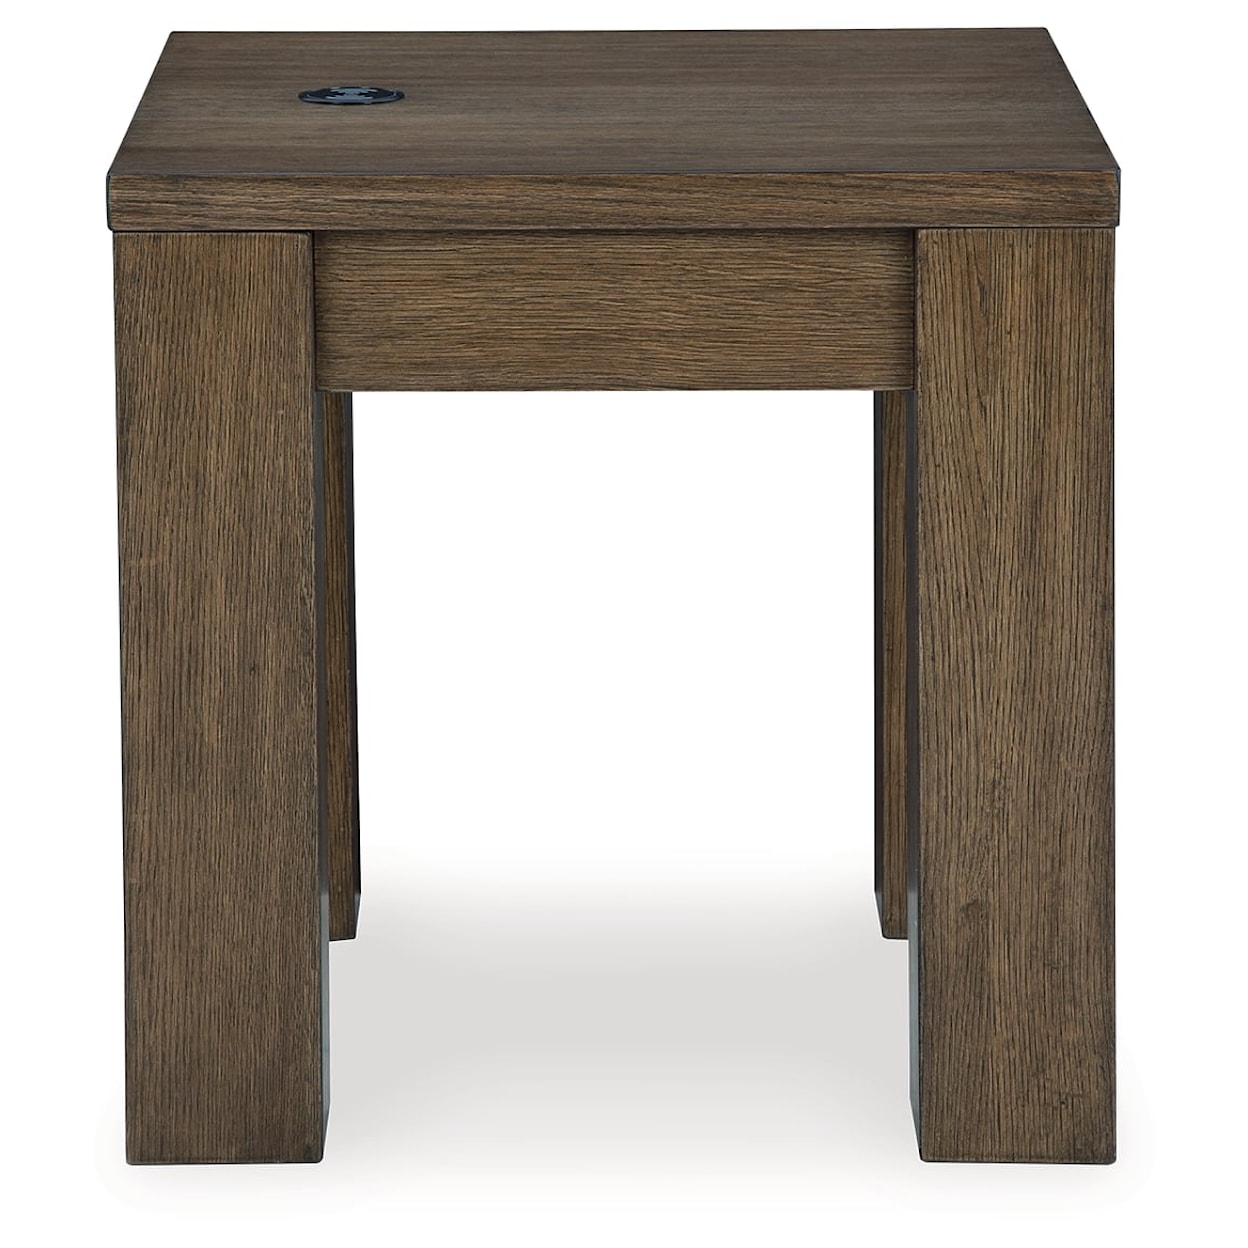 Ashley Furniture Signature Design Rosswain Square End Table